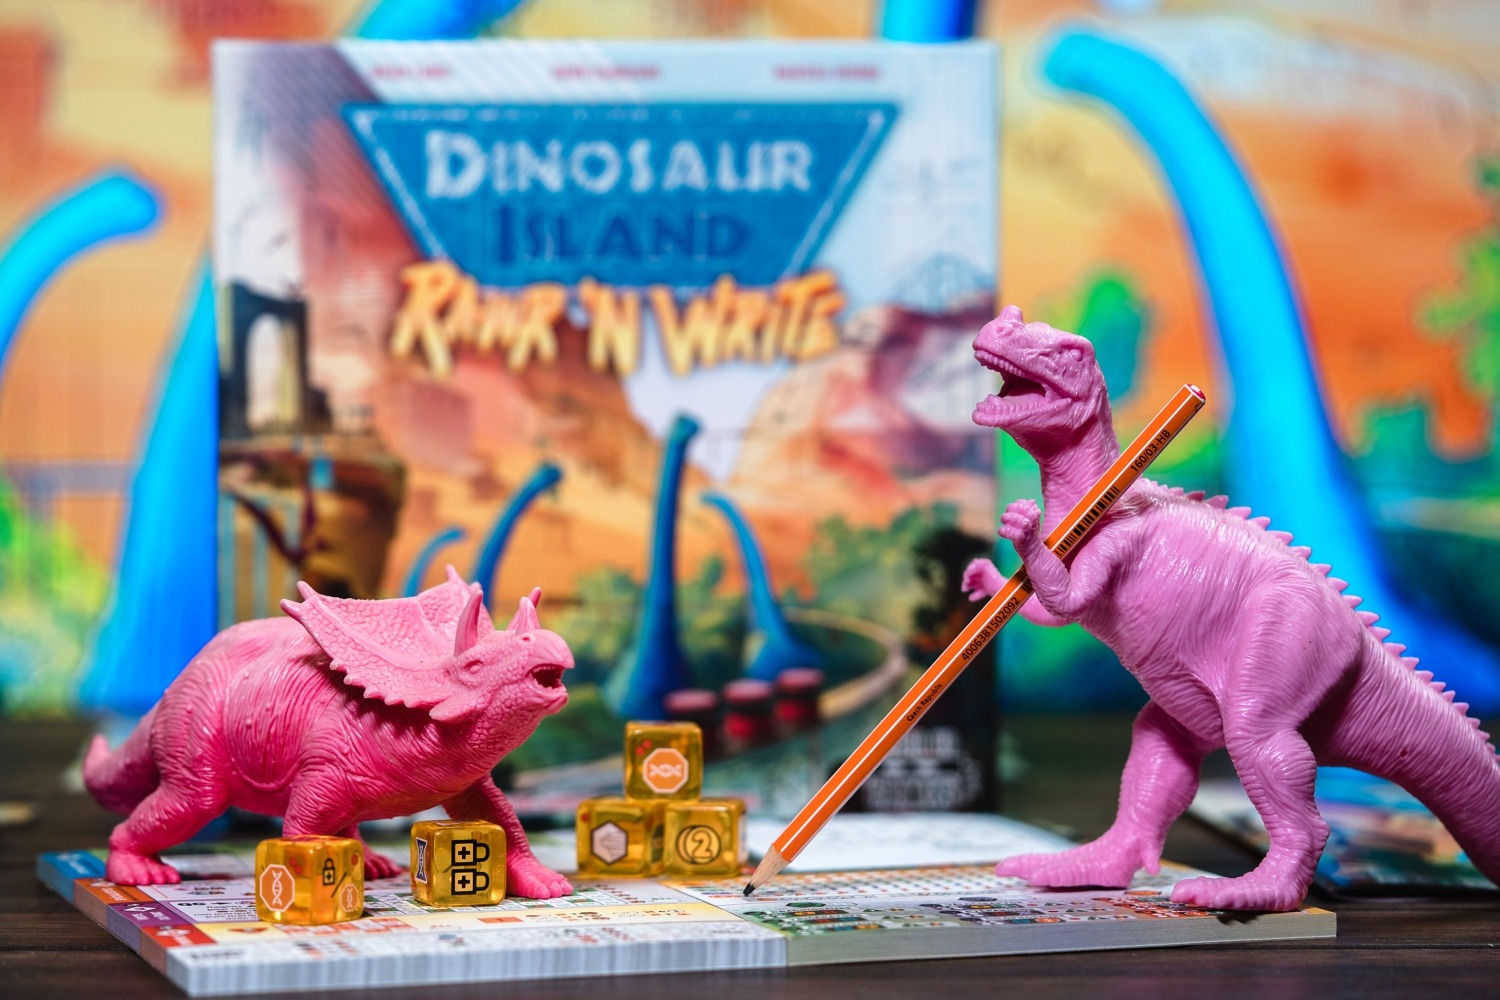 Dinosaur island rawr n write catch up games boardgame jeu de société 